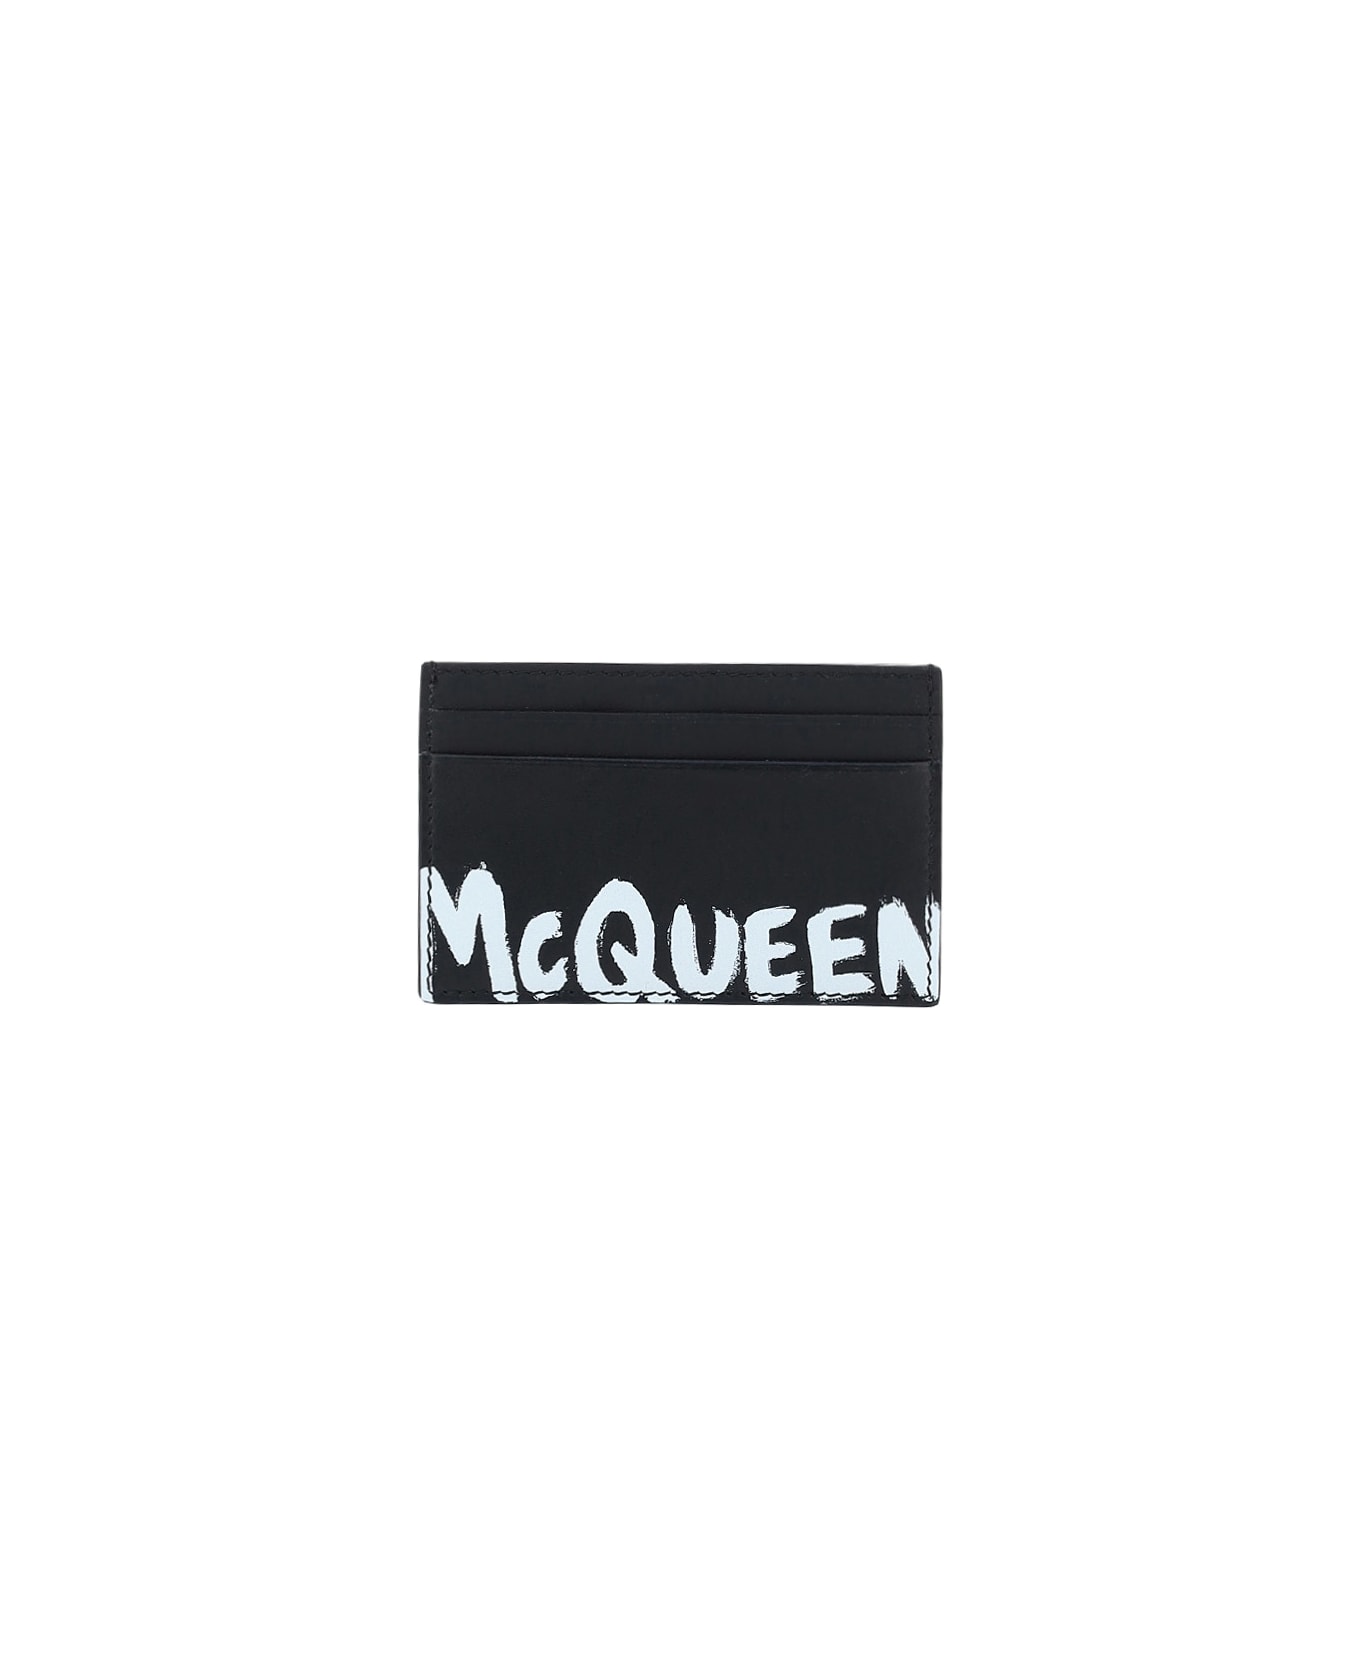 Alexander McQueen Graffiti Print Card Holder - Black/white